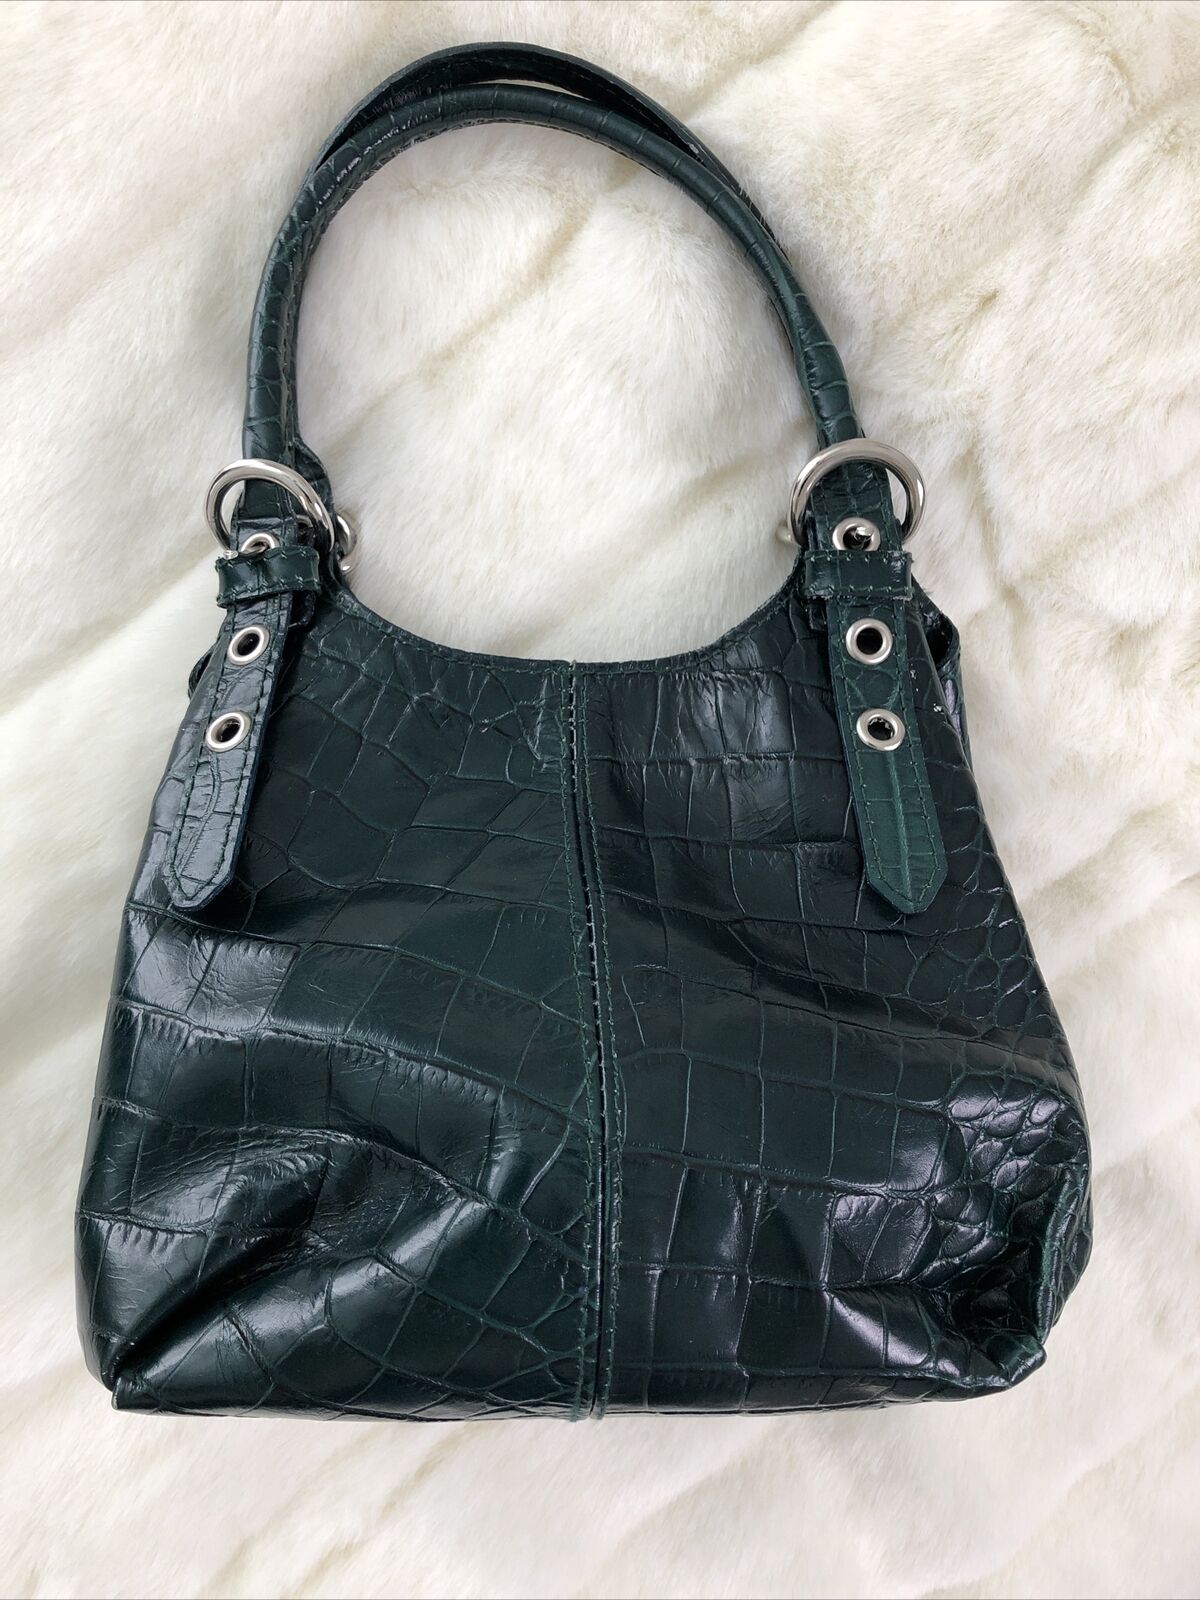 Ceoni Piero Small Leather Shoulder/Handbag, Made in Italy, Green | eBay